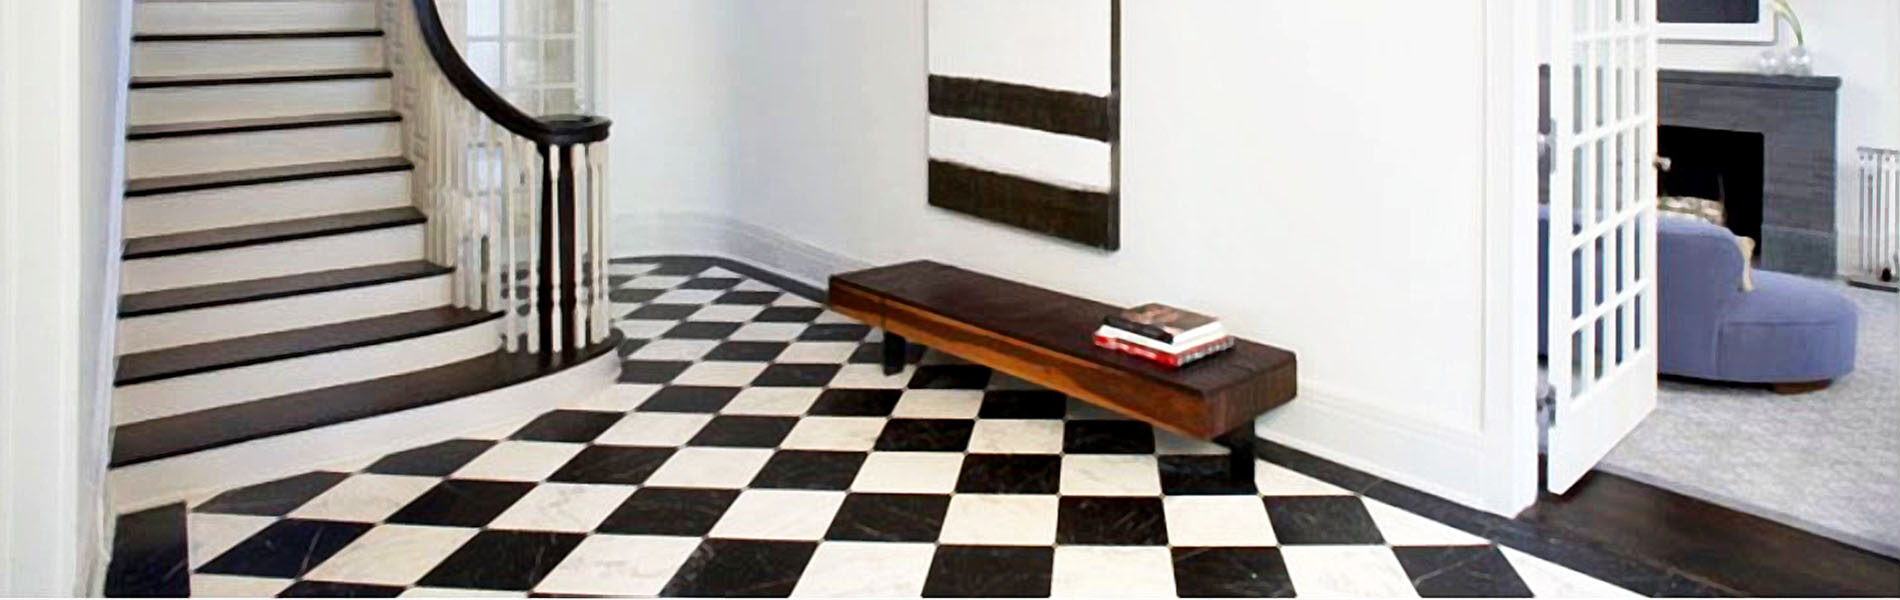 custom stone fabrication flooring toronto